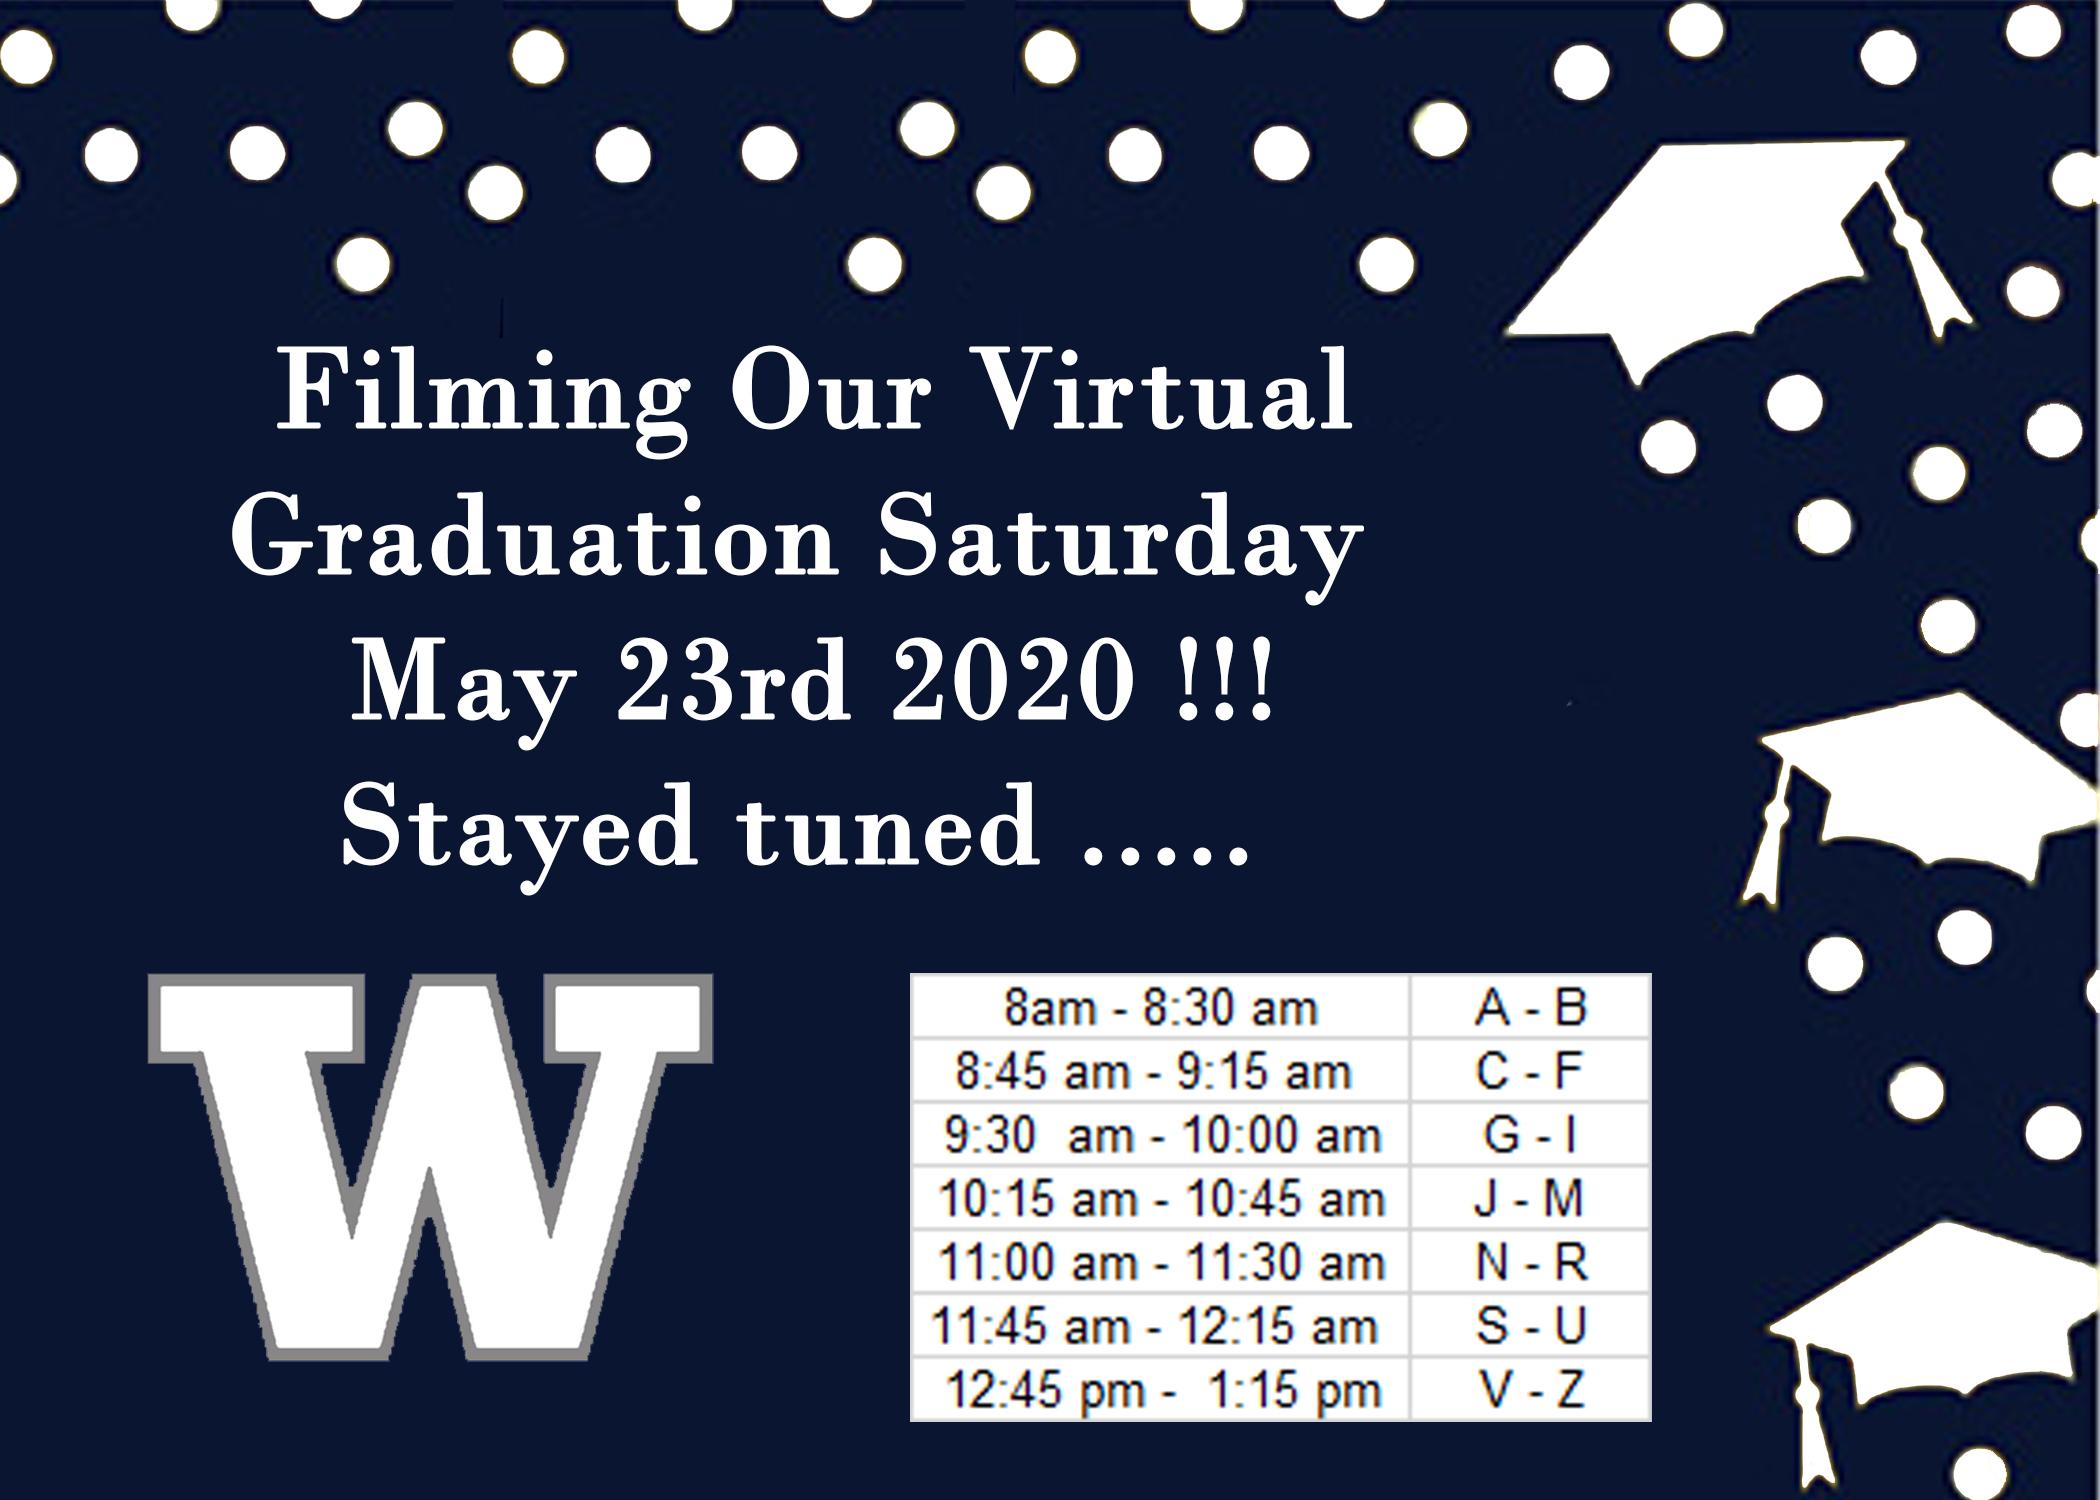 virtual graduation filming schedule 